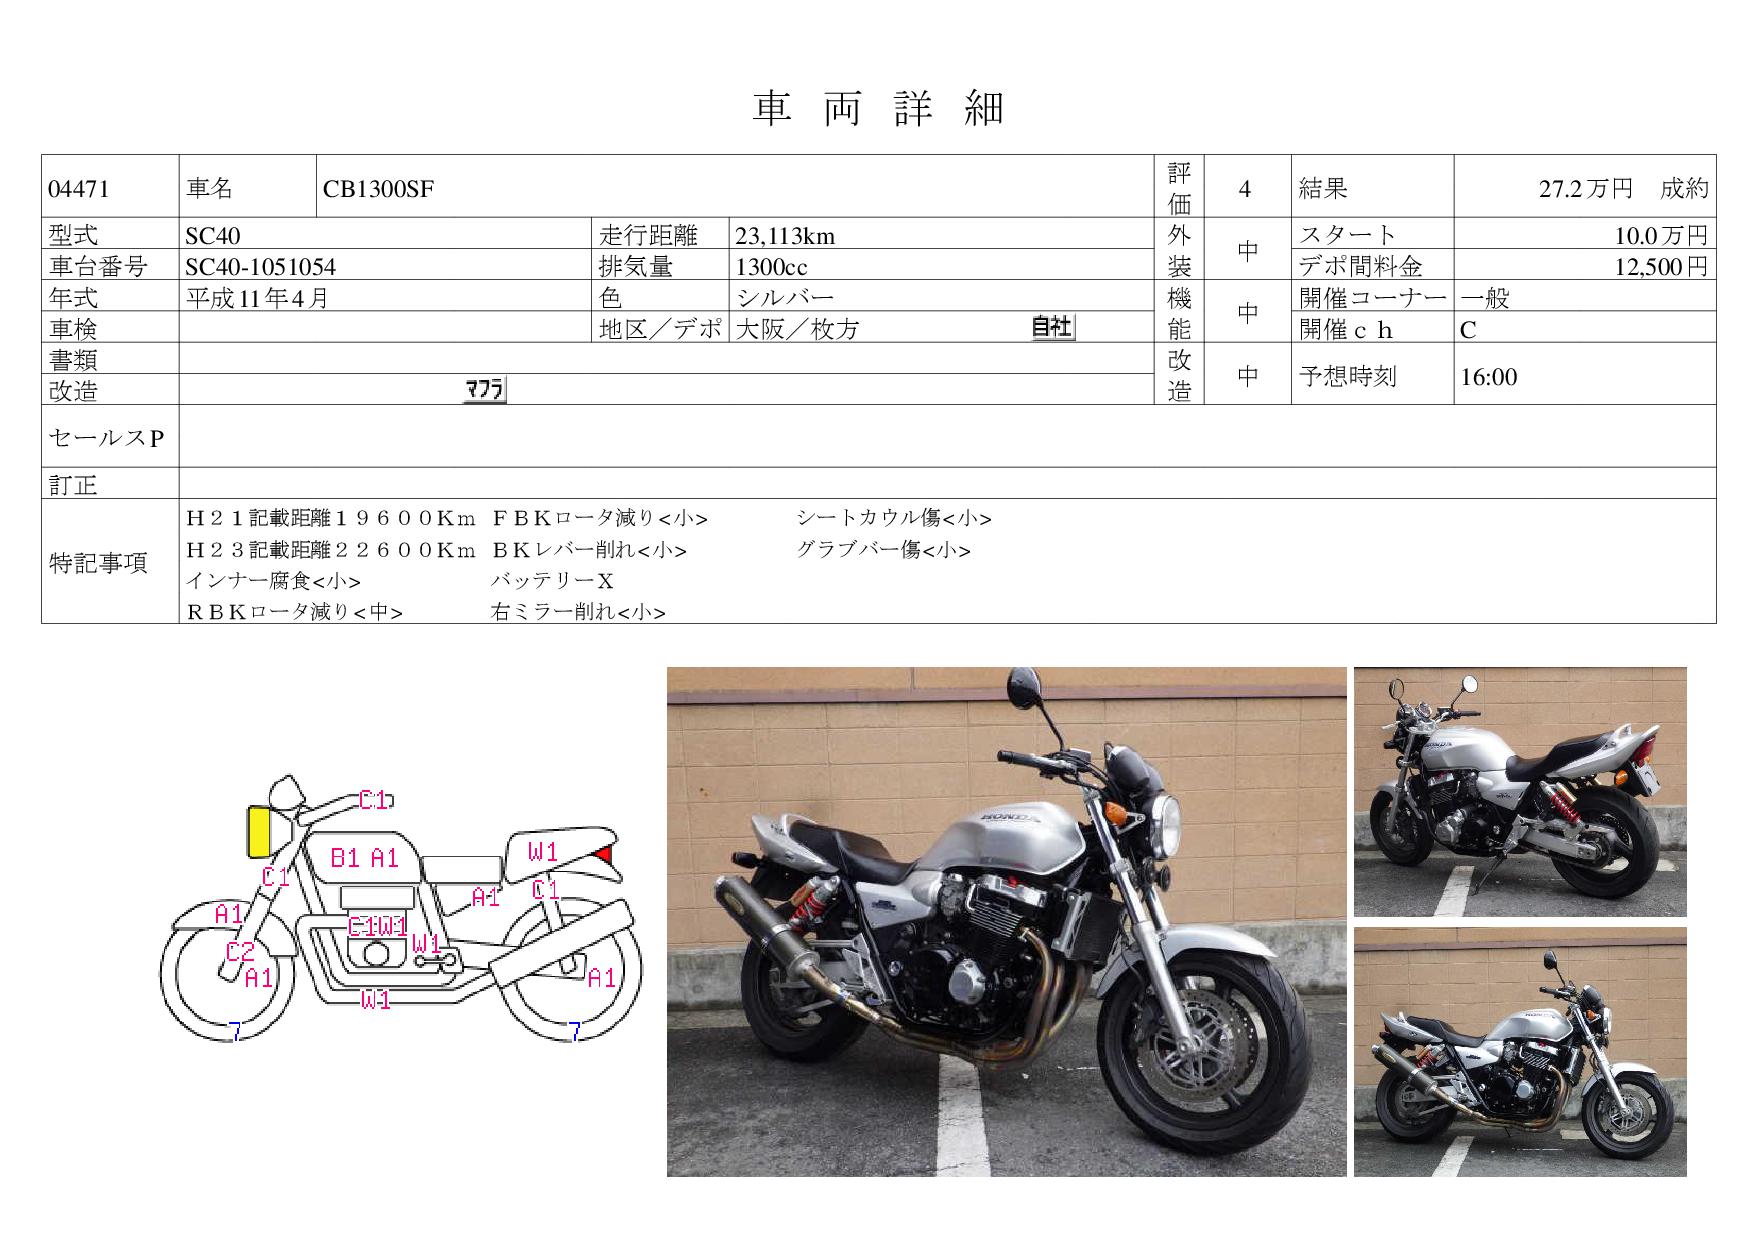 Мануалы и документация на Honda CB 500 F